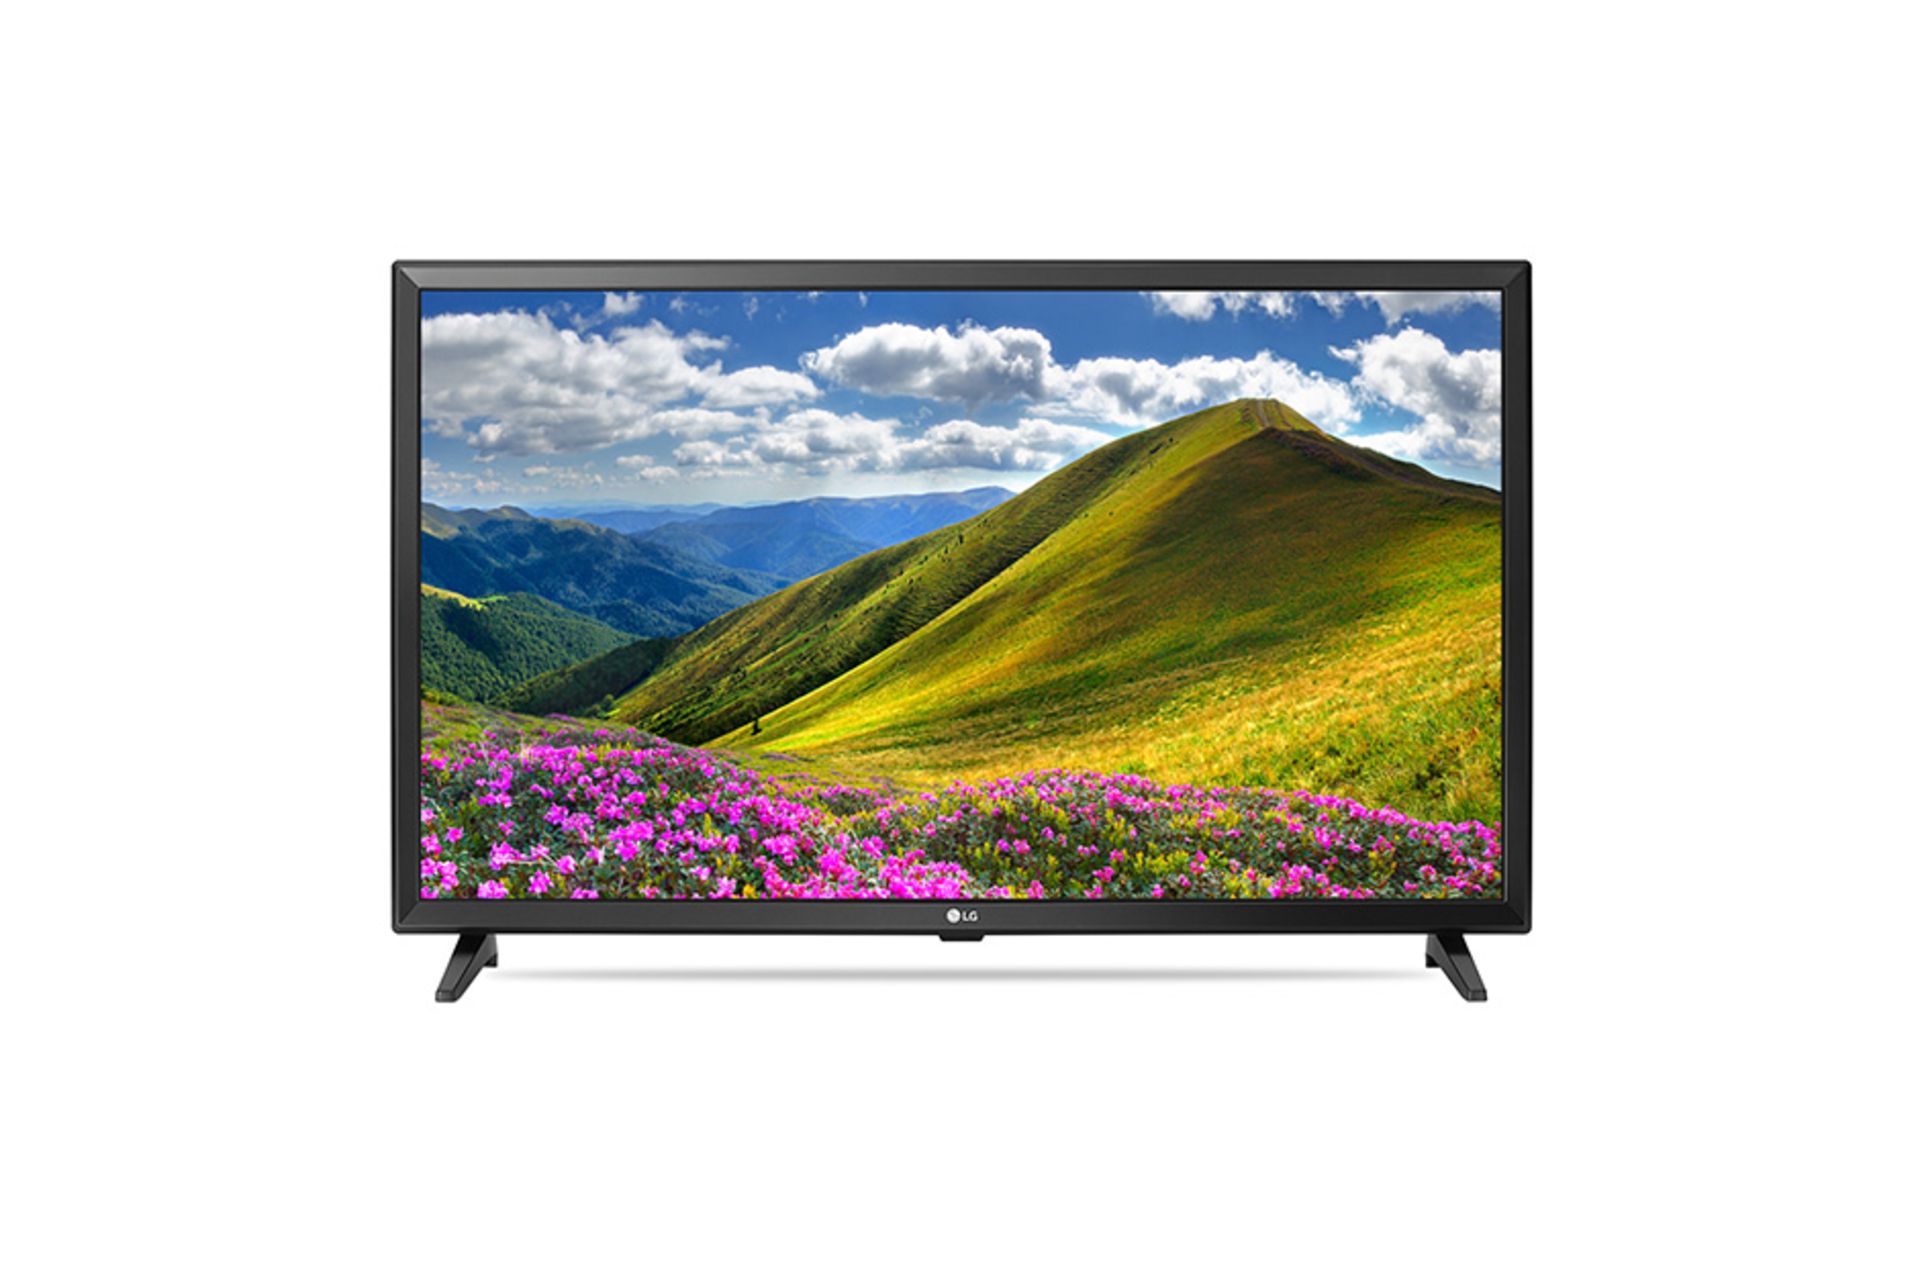 V Grade A LG 32 Inch FULL HD LED TV WITH FREEVIEW HD 32LJ510U